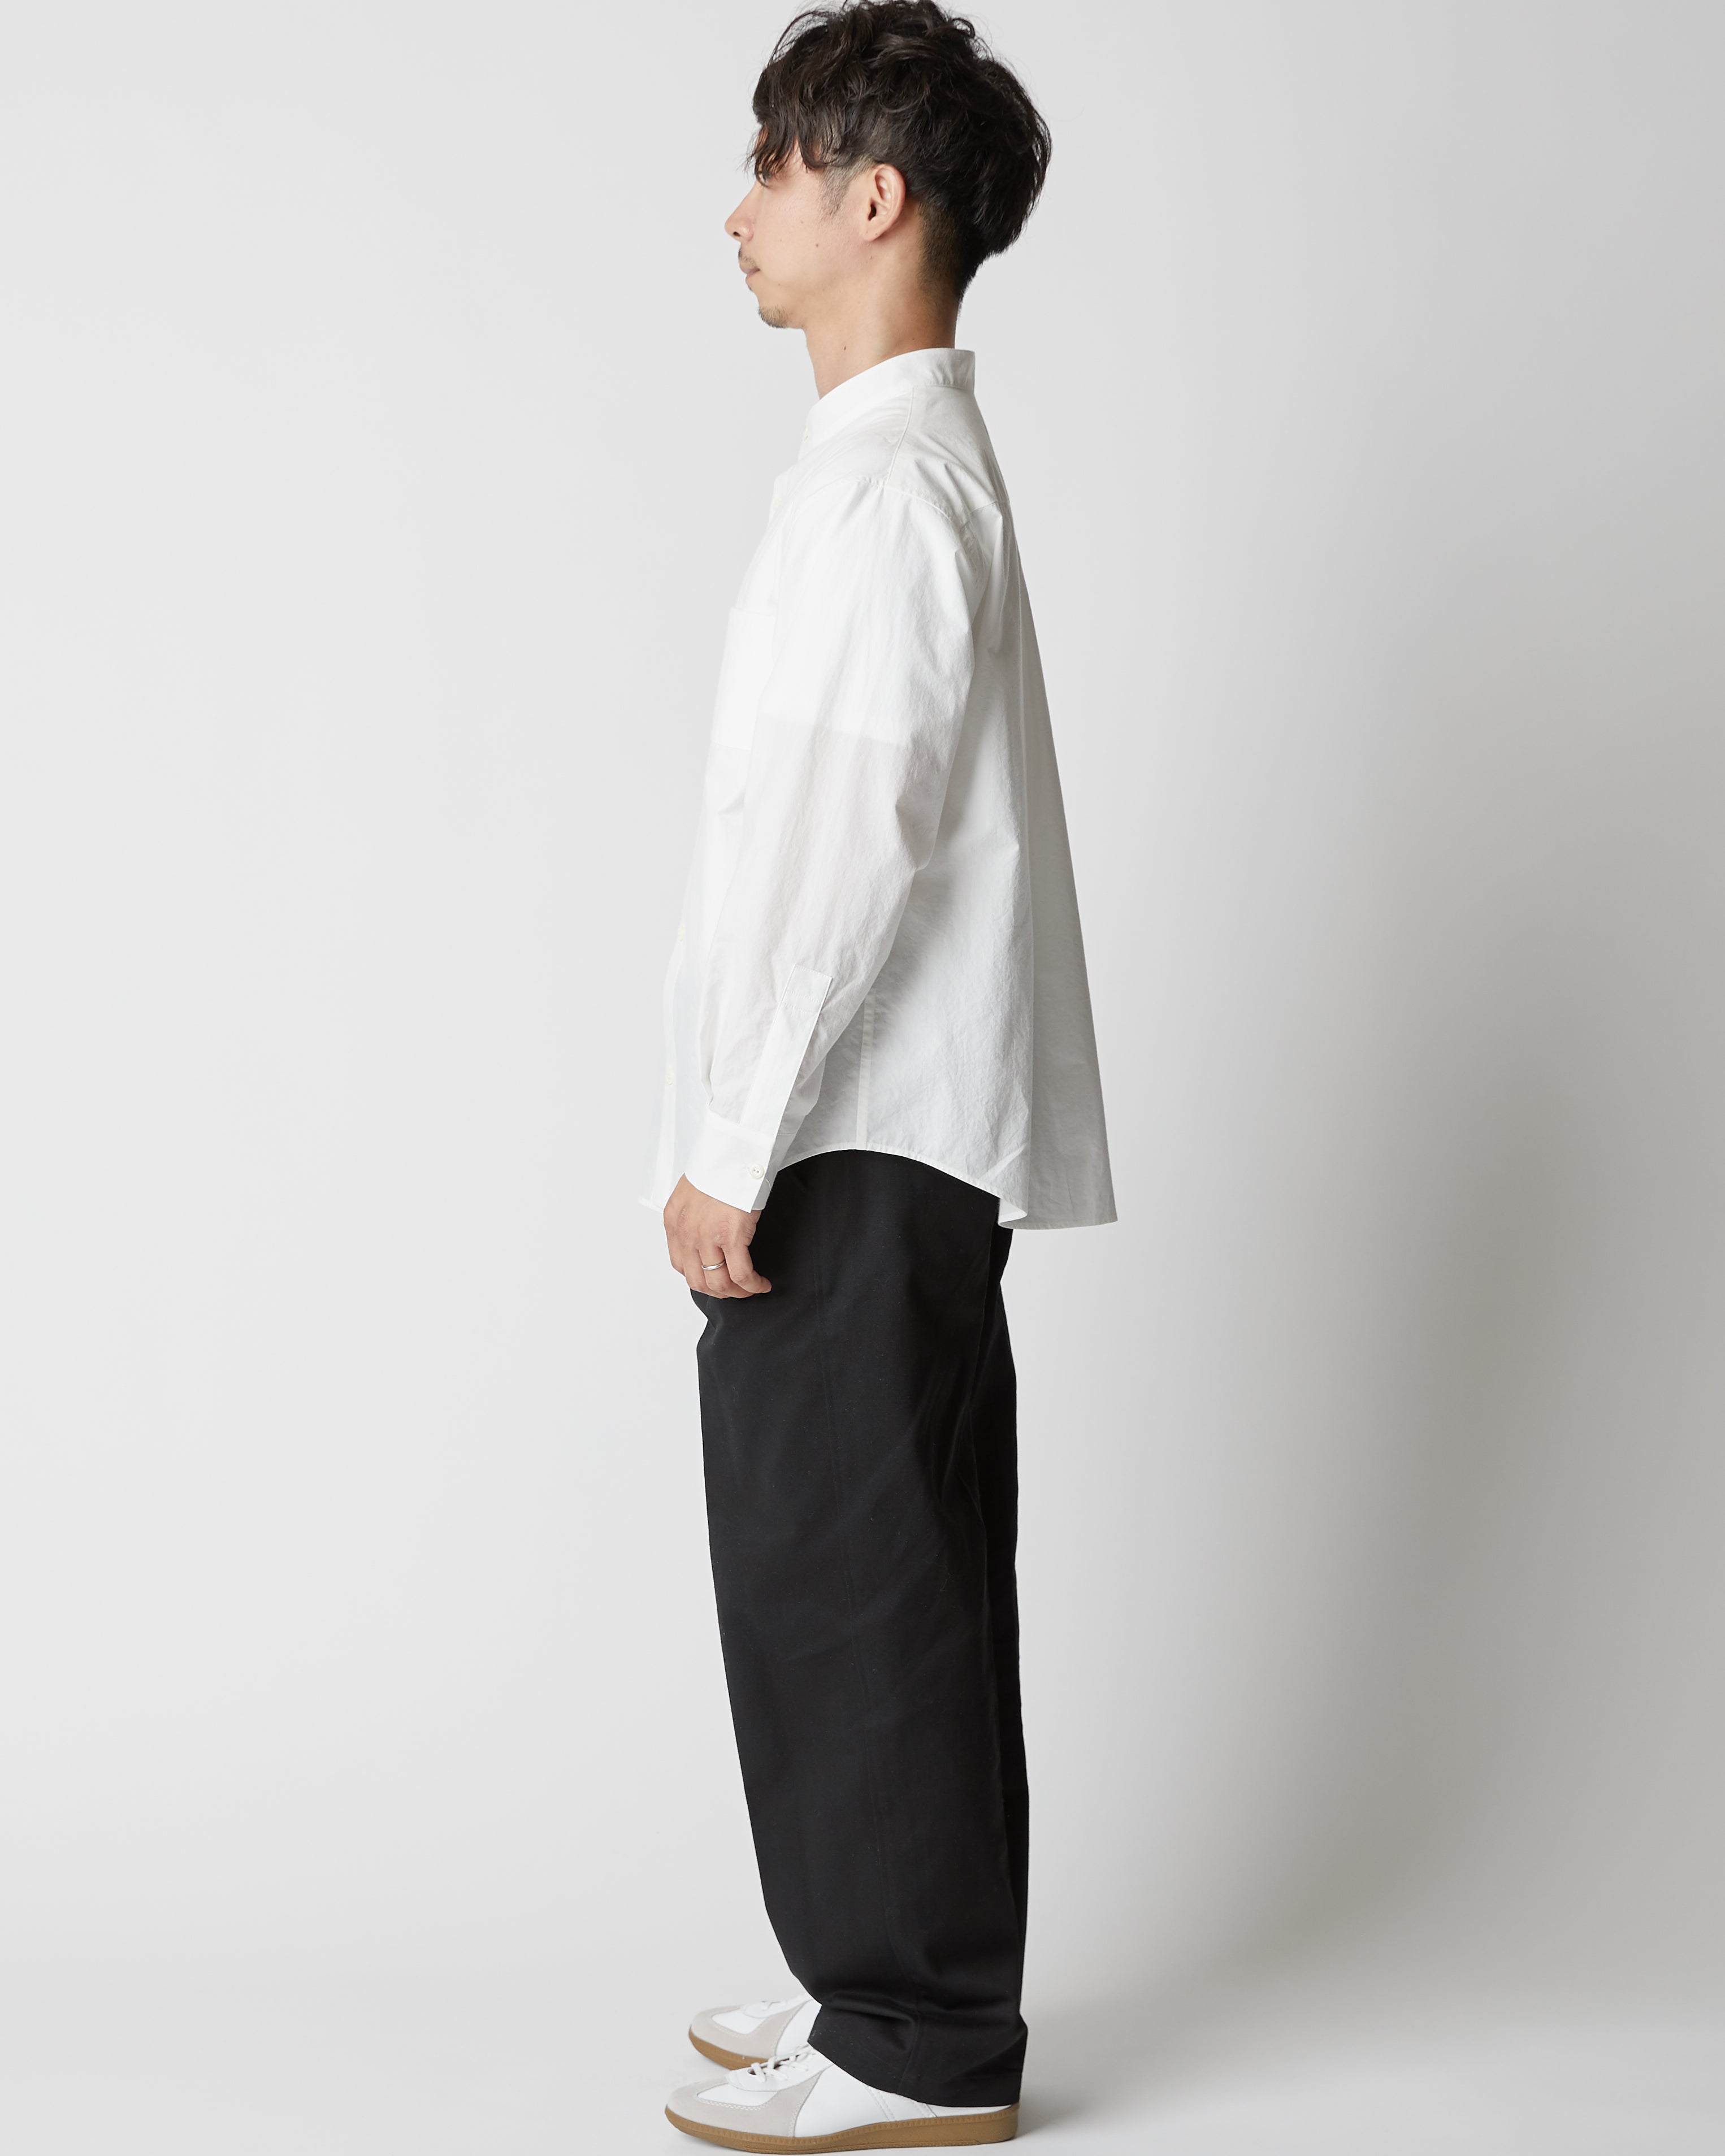 calm Stand collar Shirt（スタンドカラーシャツ） – calm160ー160cm